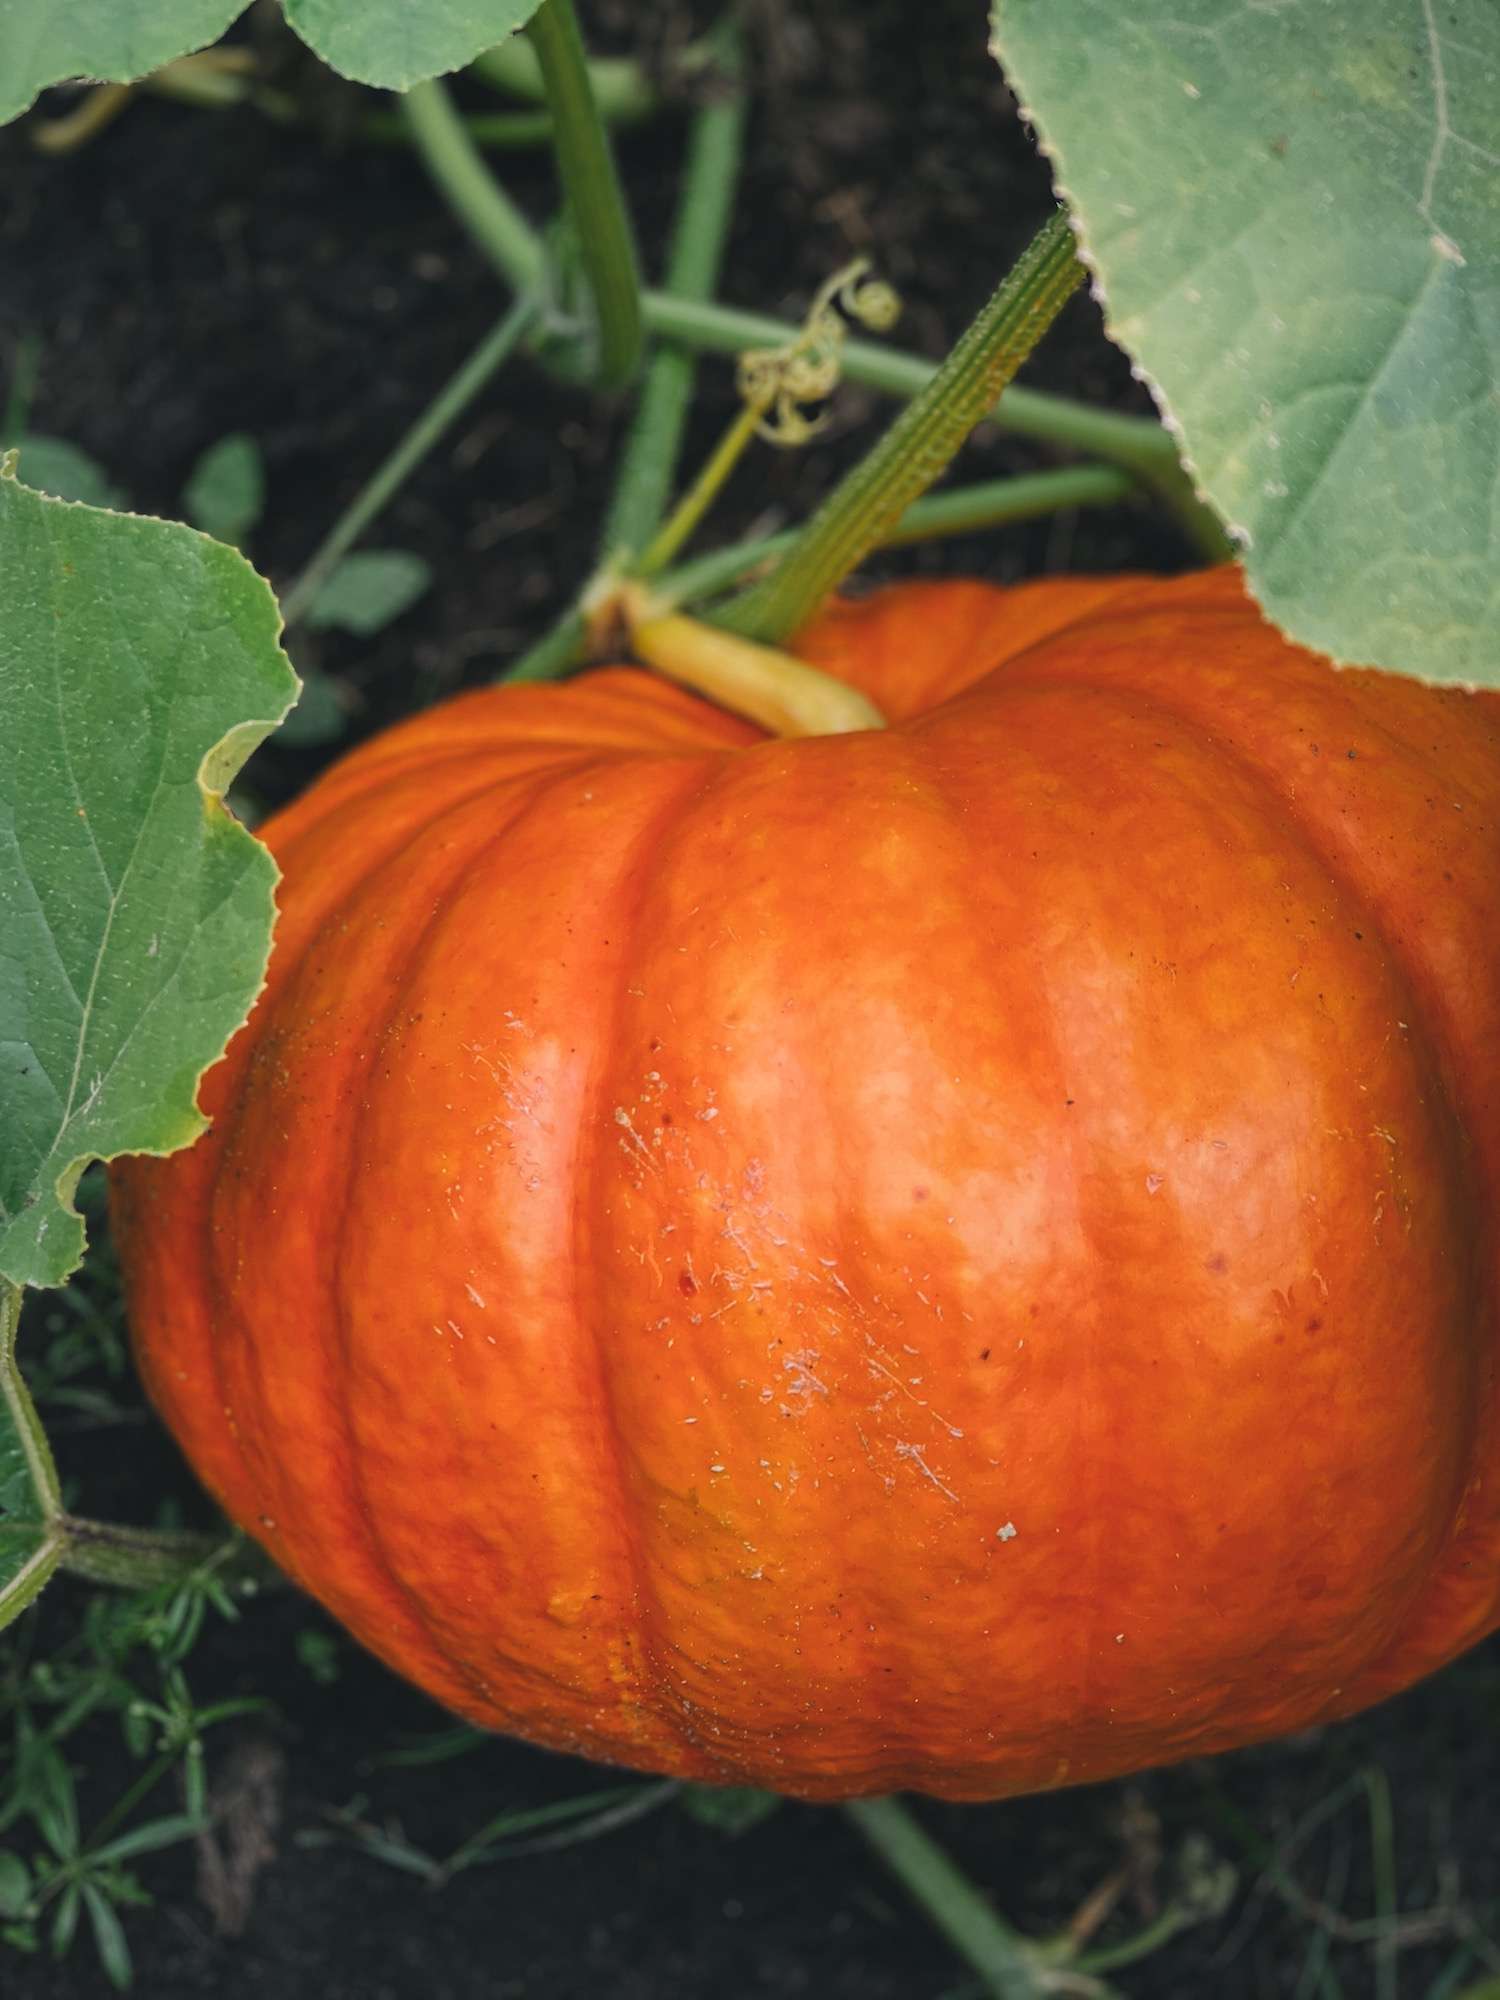 A close up view of a cinderella pumpkin growing in the garden